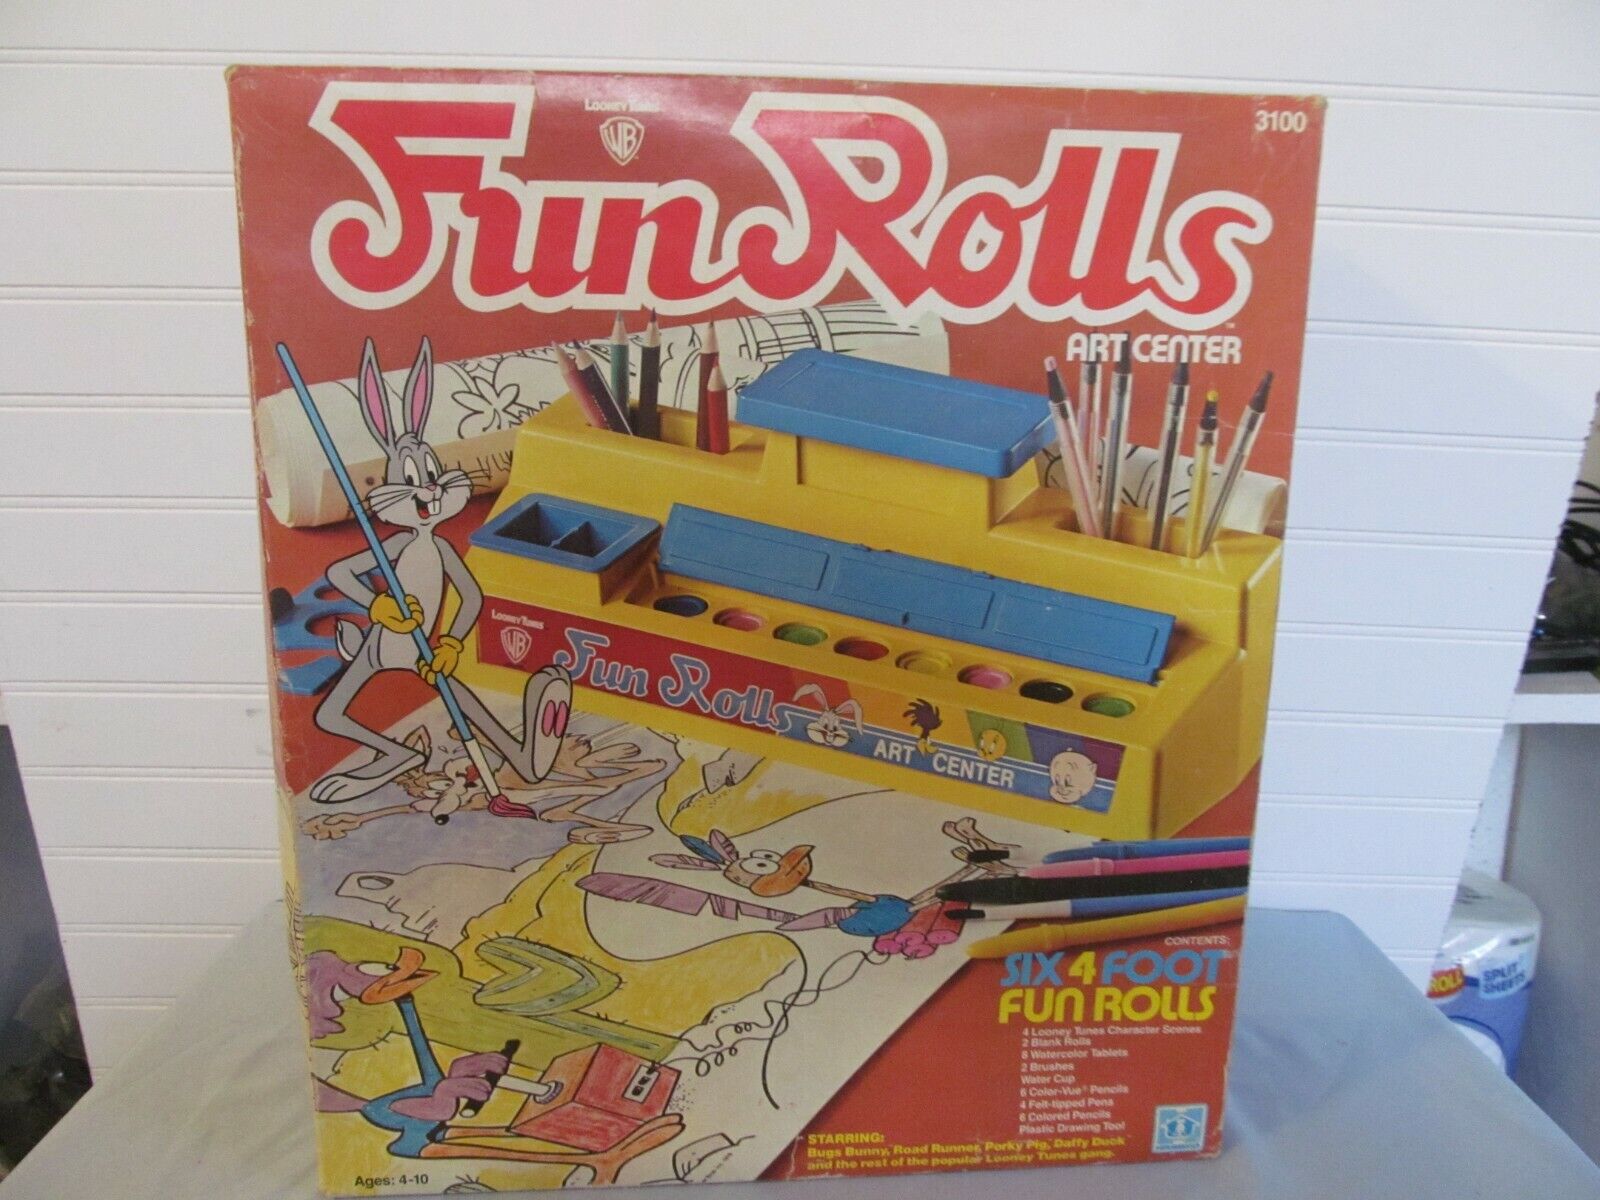  fun rolls art center hasbro 3100 1979 looney tunes brand new (box damaged)